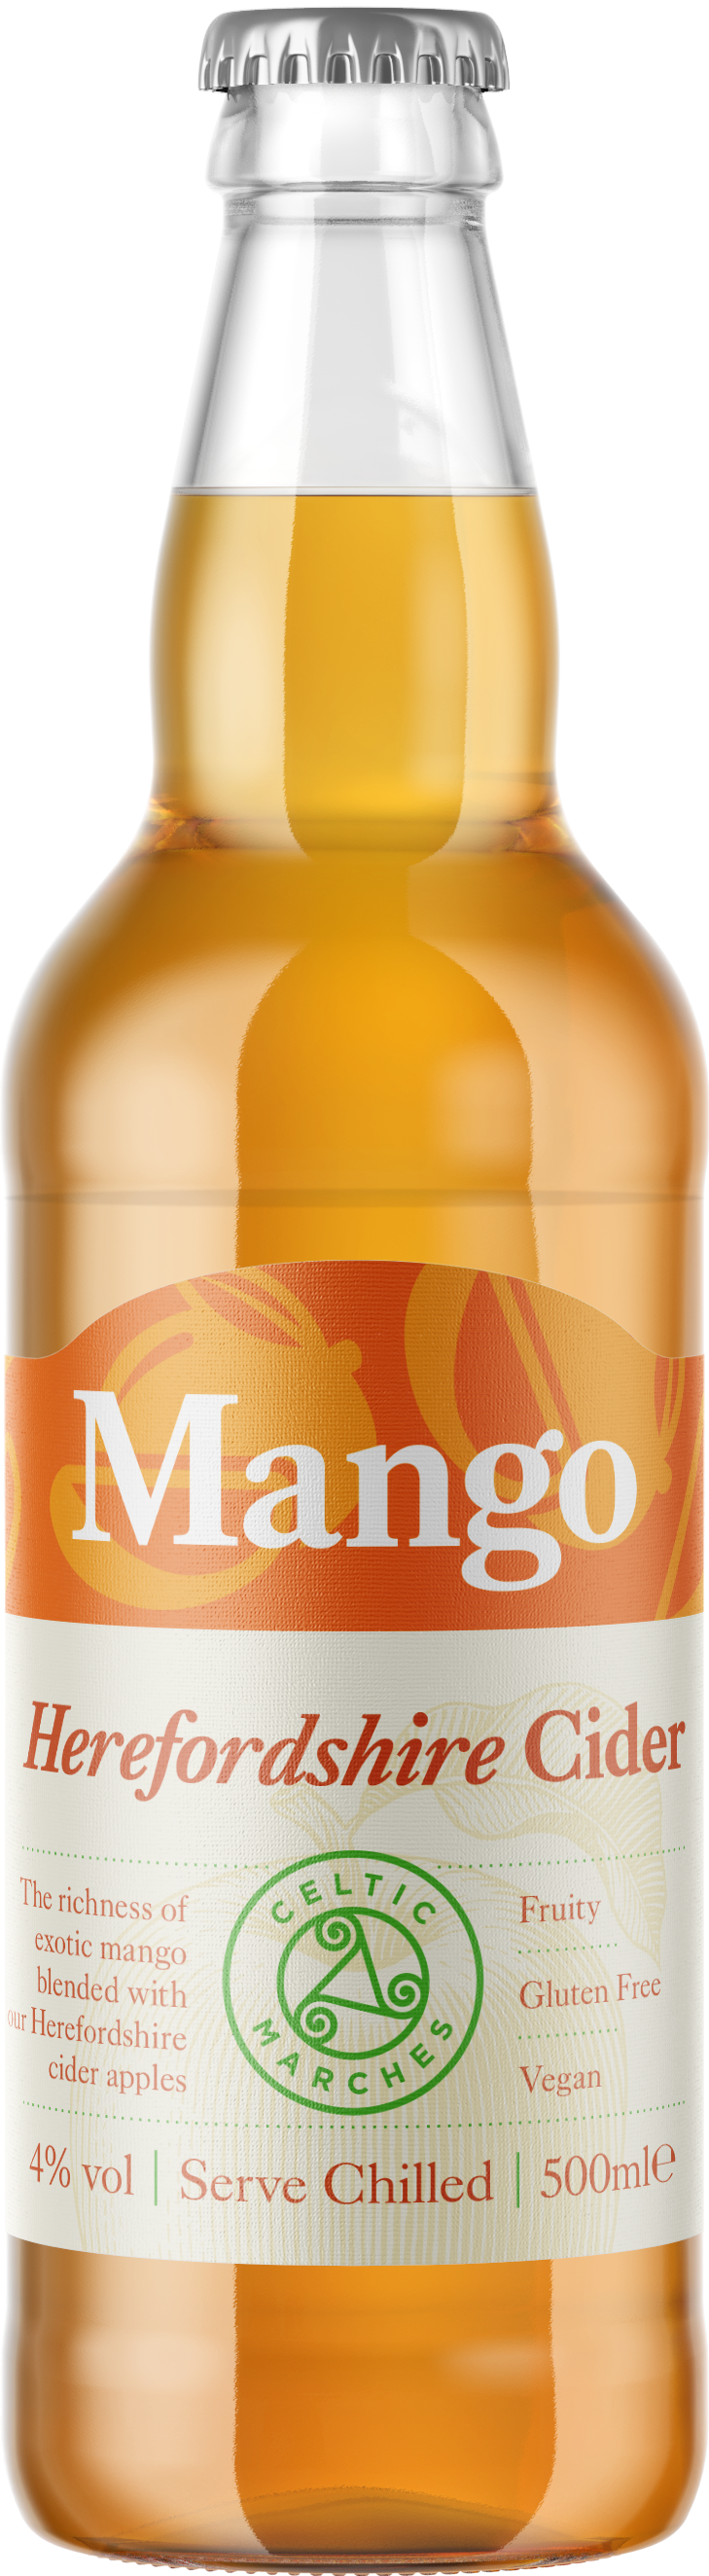 Mango 4% 12 x 500ml Bottles